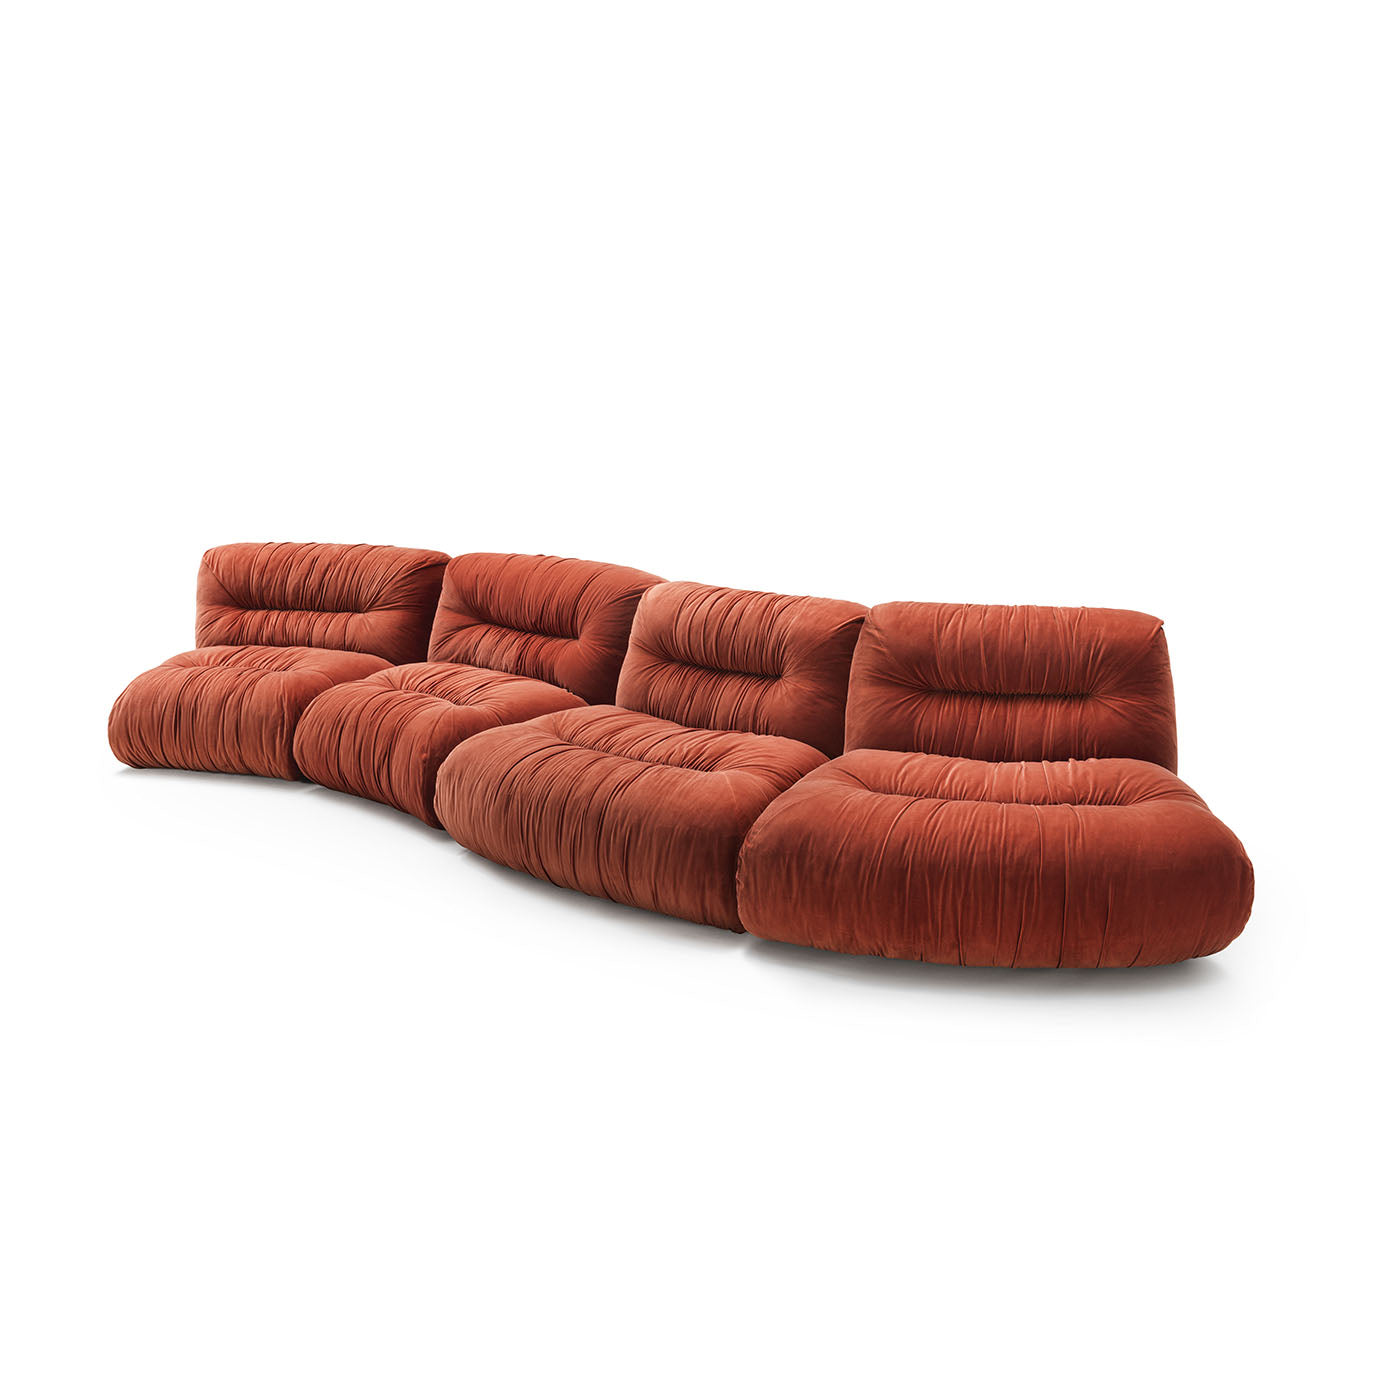 Mambo Modular Orange Fabric Sofa by Lorenza Bozzoli - Alternative view 1